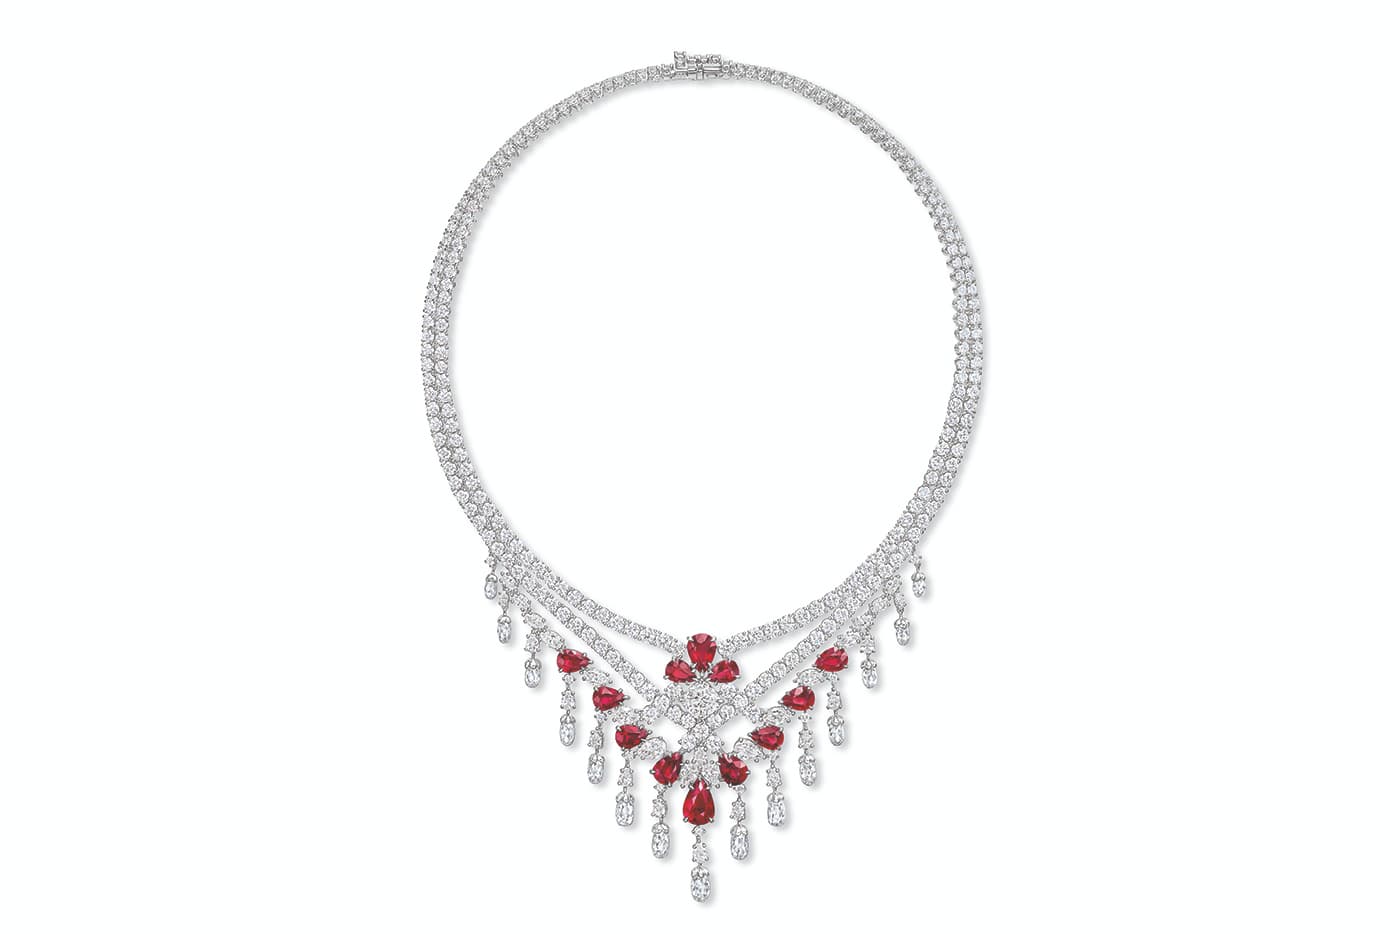 Briolette diamond fine jewellery trend from modern designers